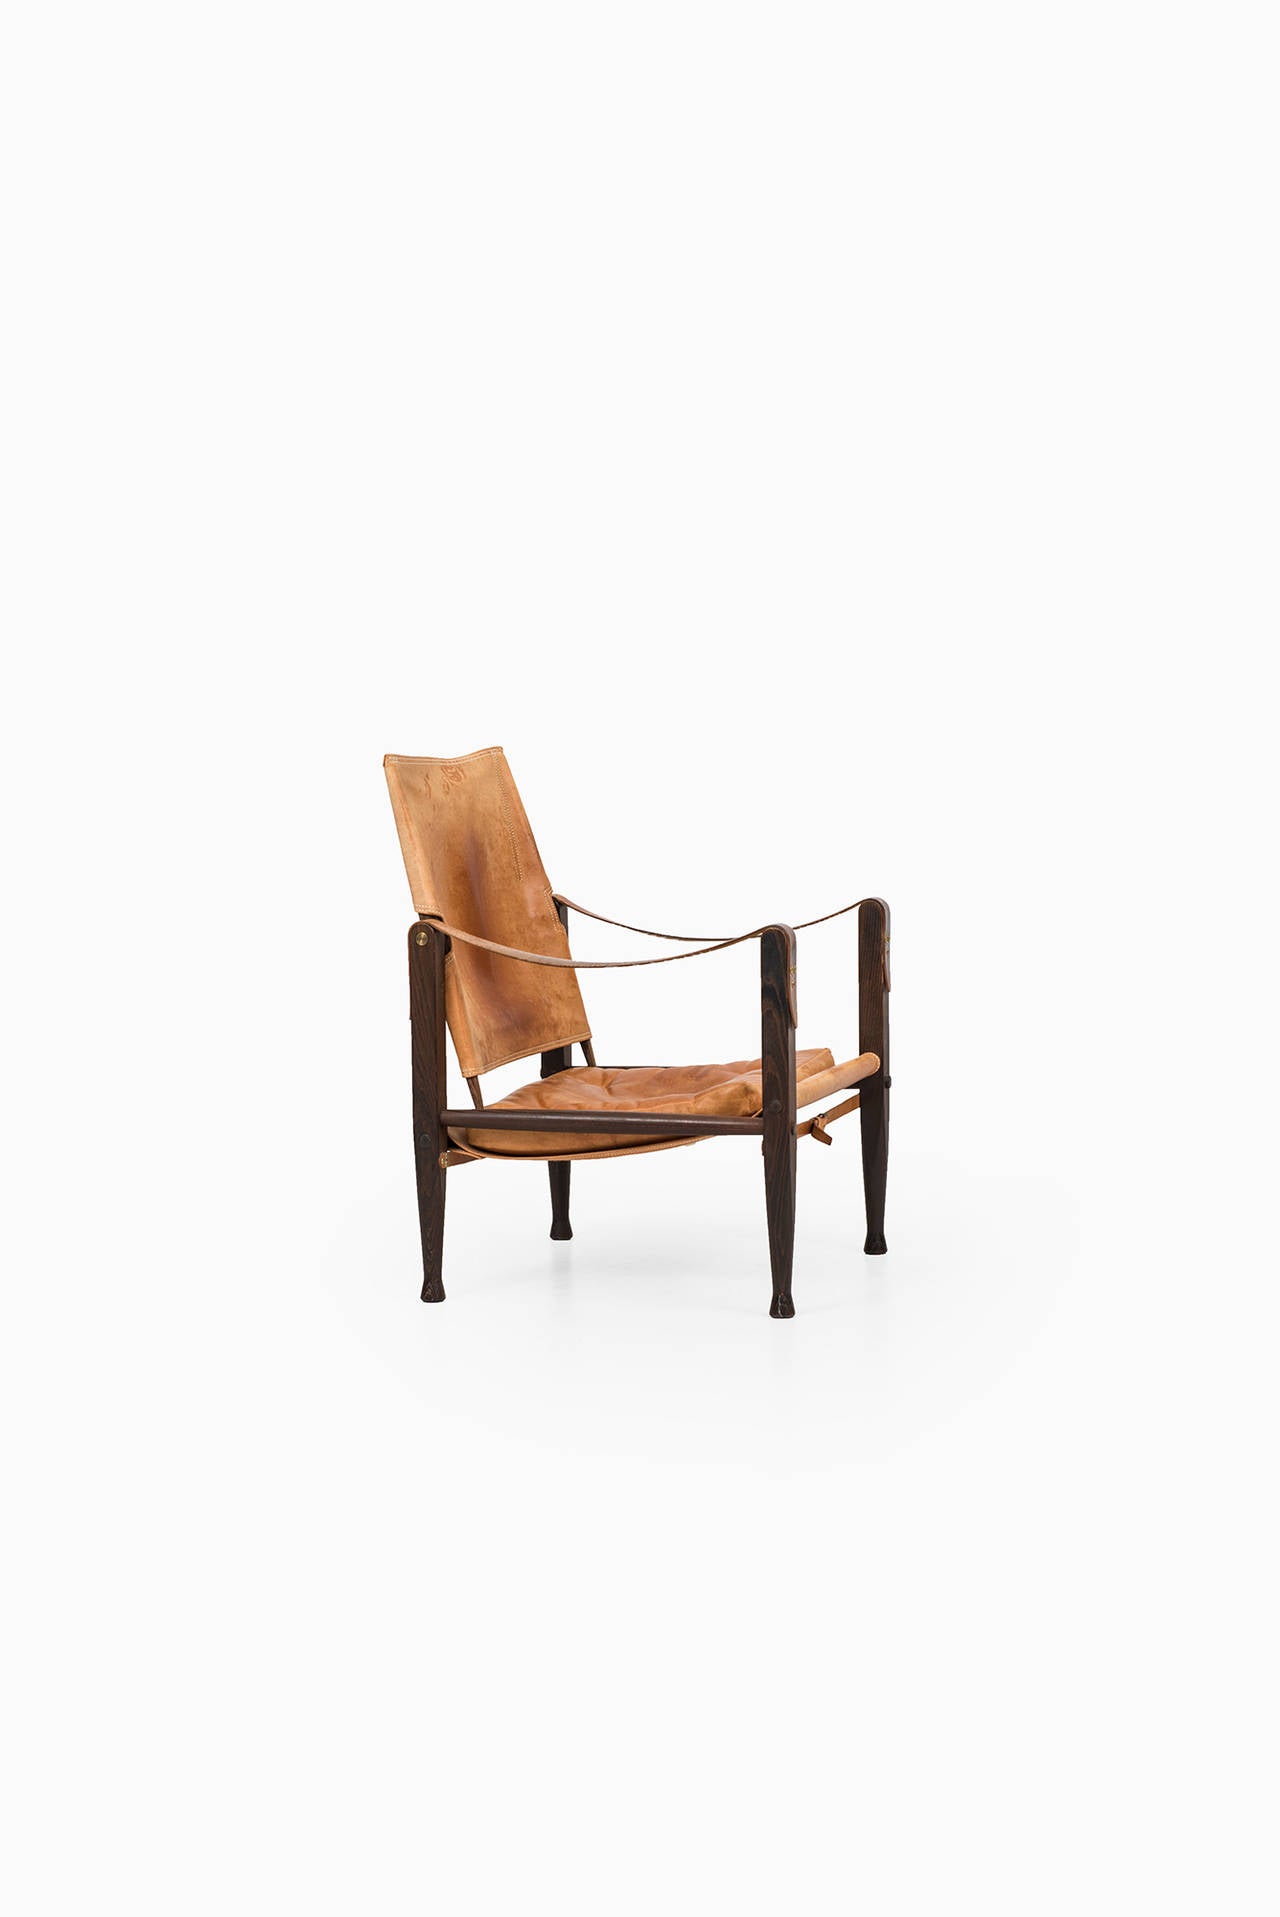 Mid-Century Modern Kaare Klint safari chair by Rud. Rasmussen in Denmark